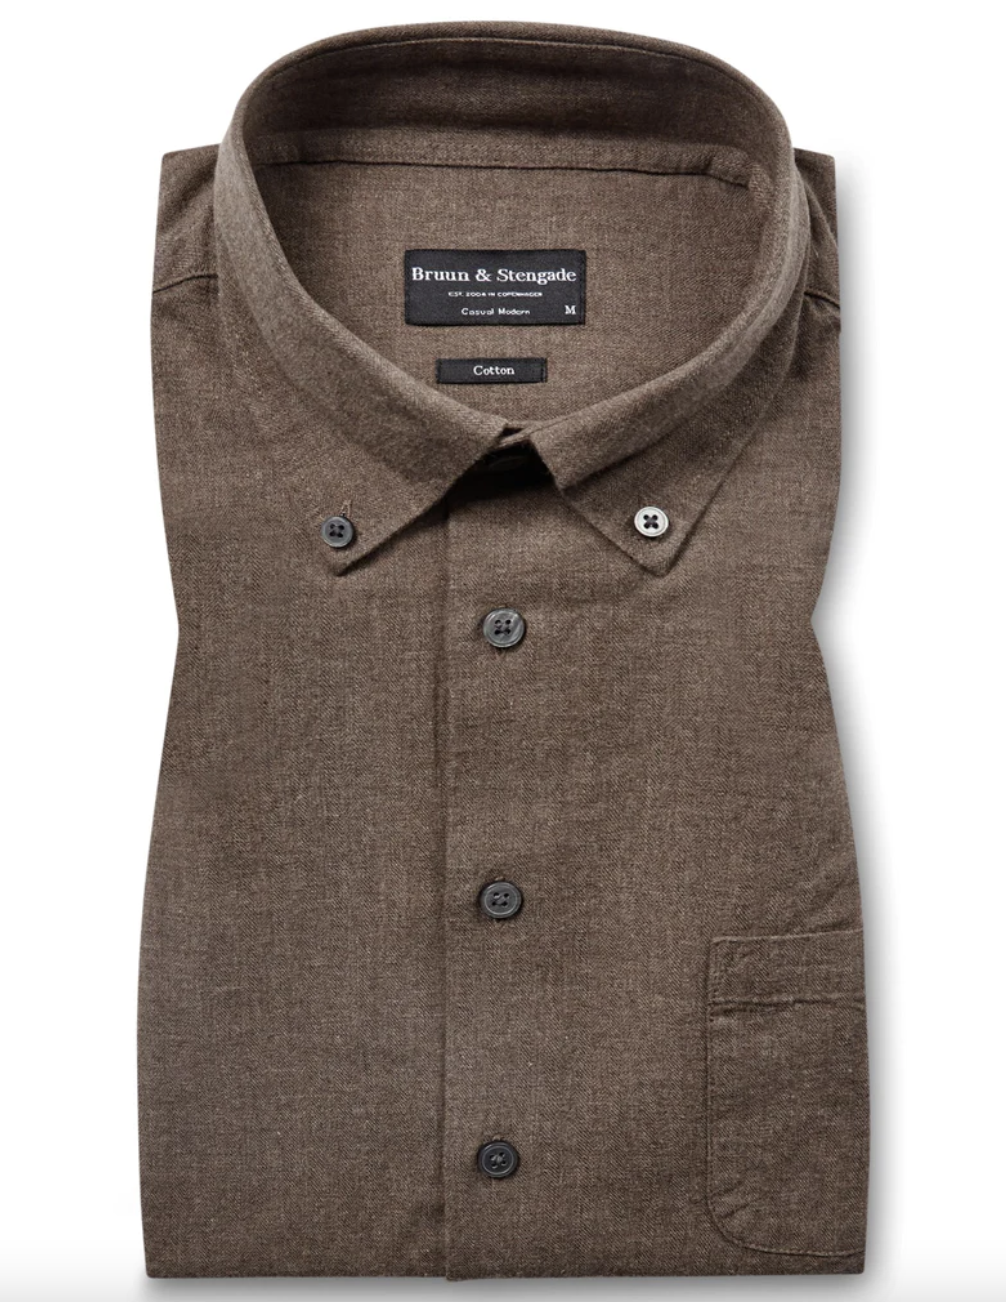 Bruun & Stengade Skjorte Cotton Brun flatpakket